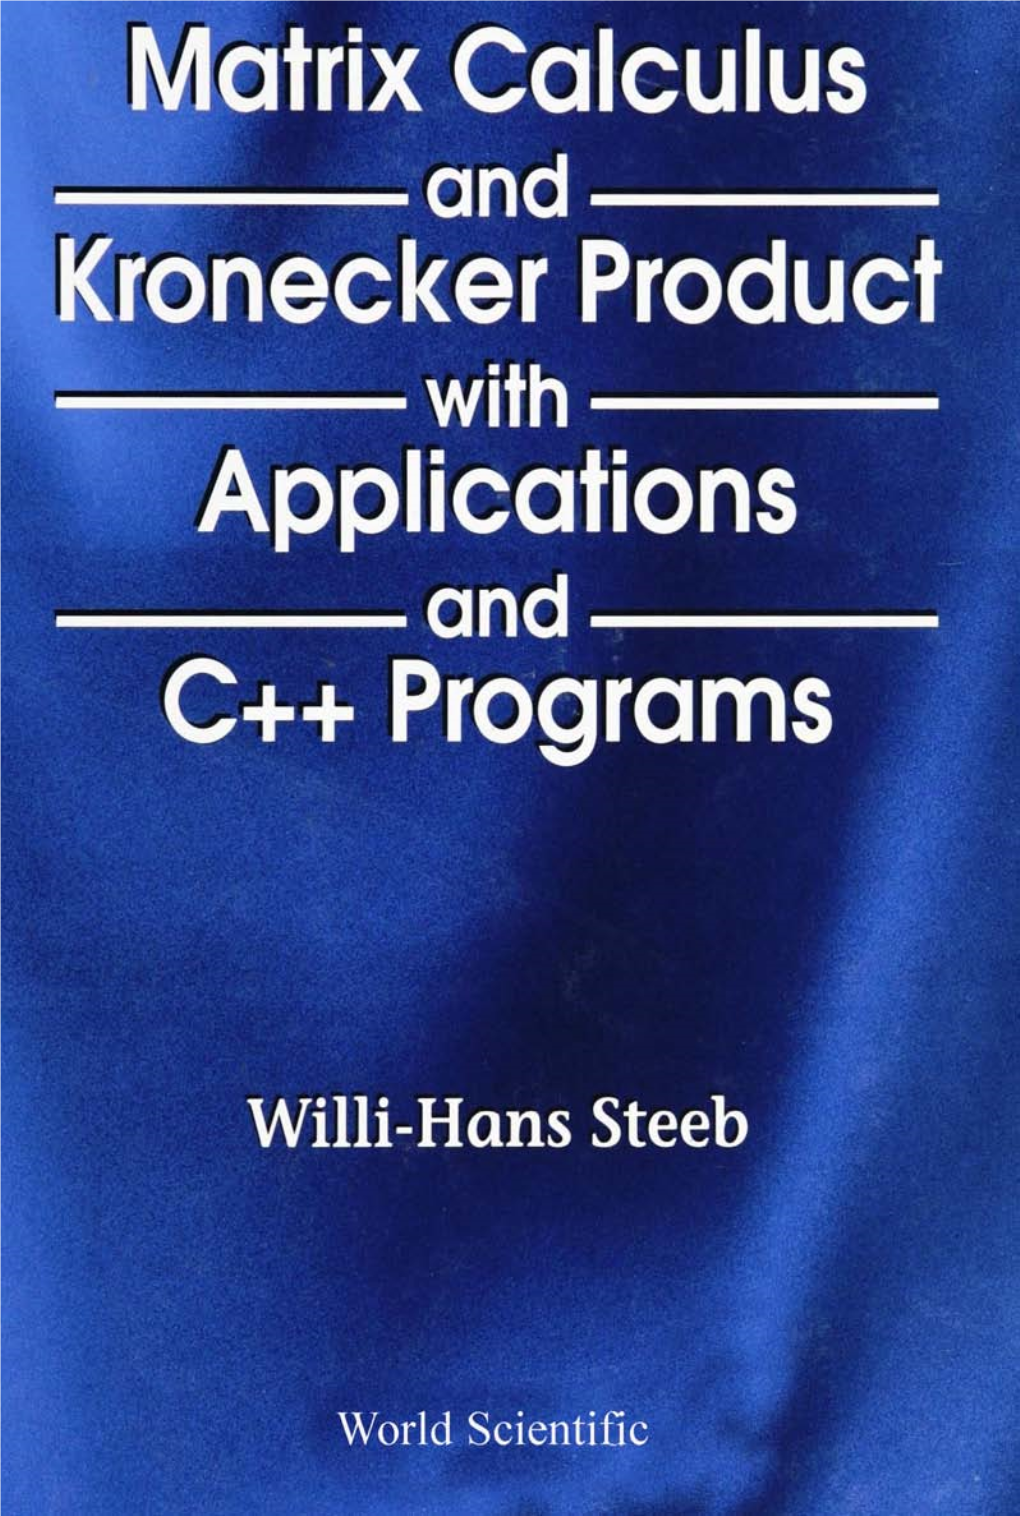 Matrix Calculus Kronecker Product Applications C++ Programs